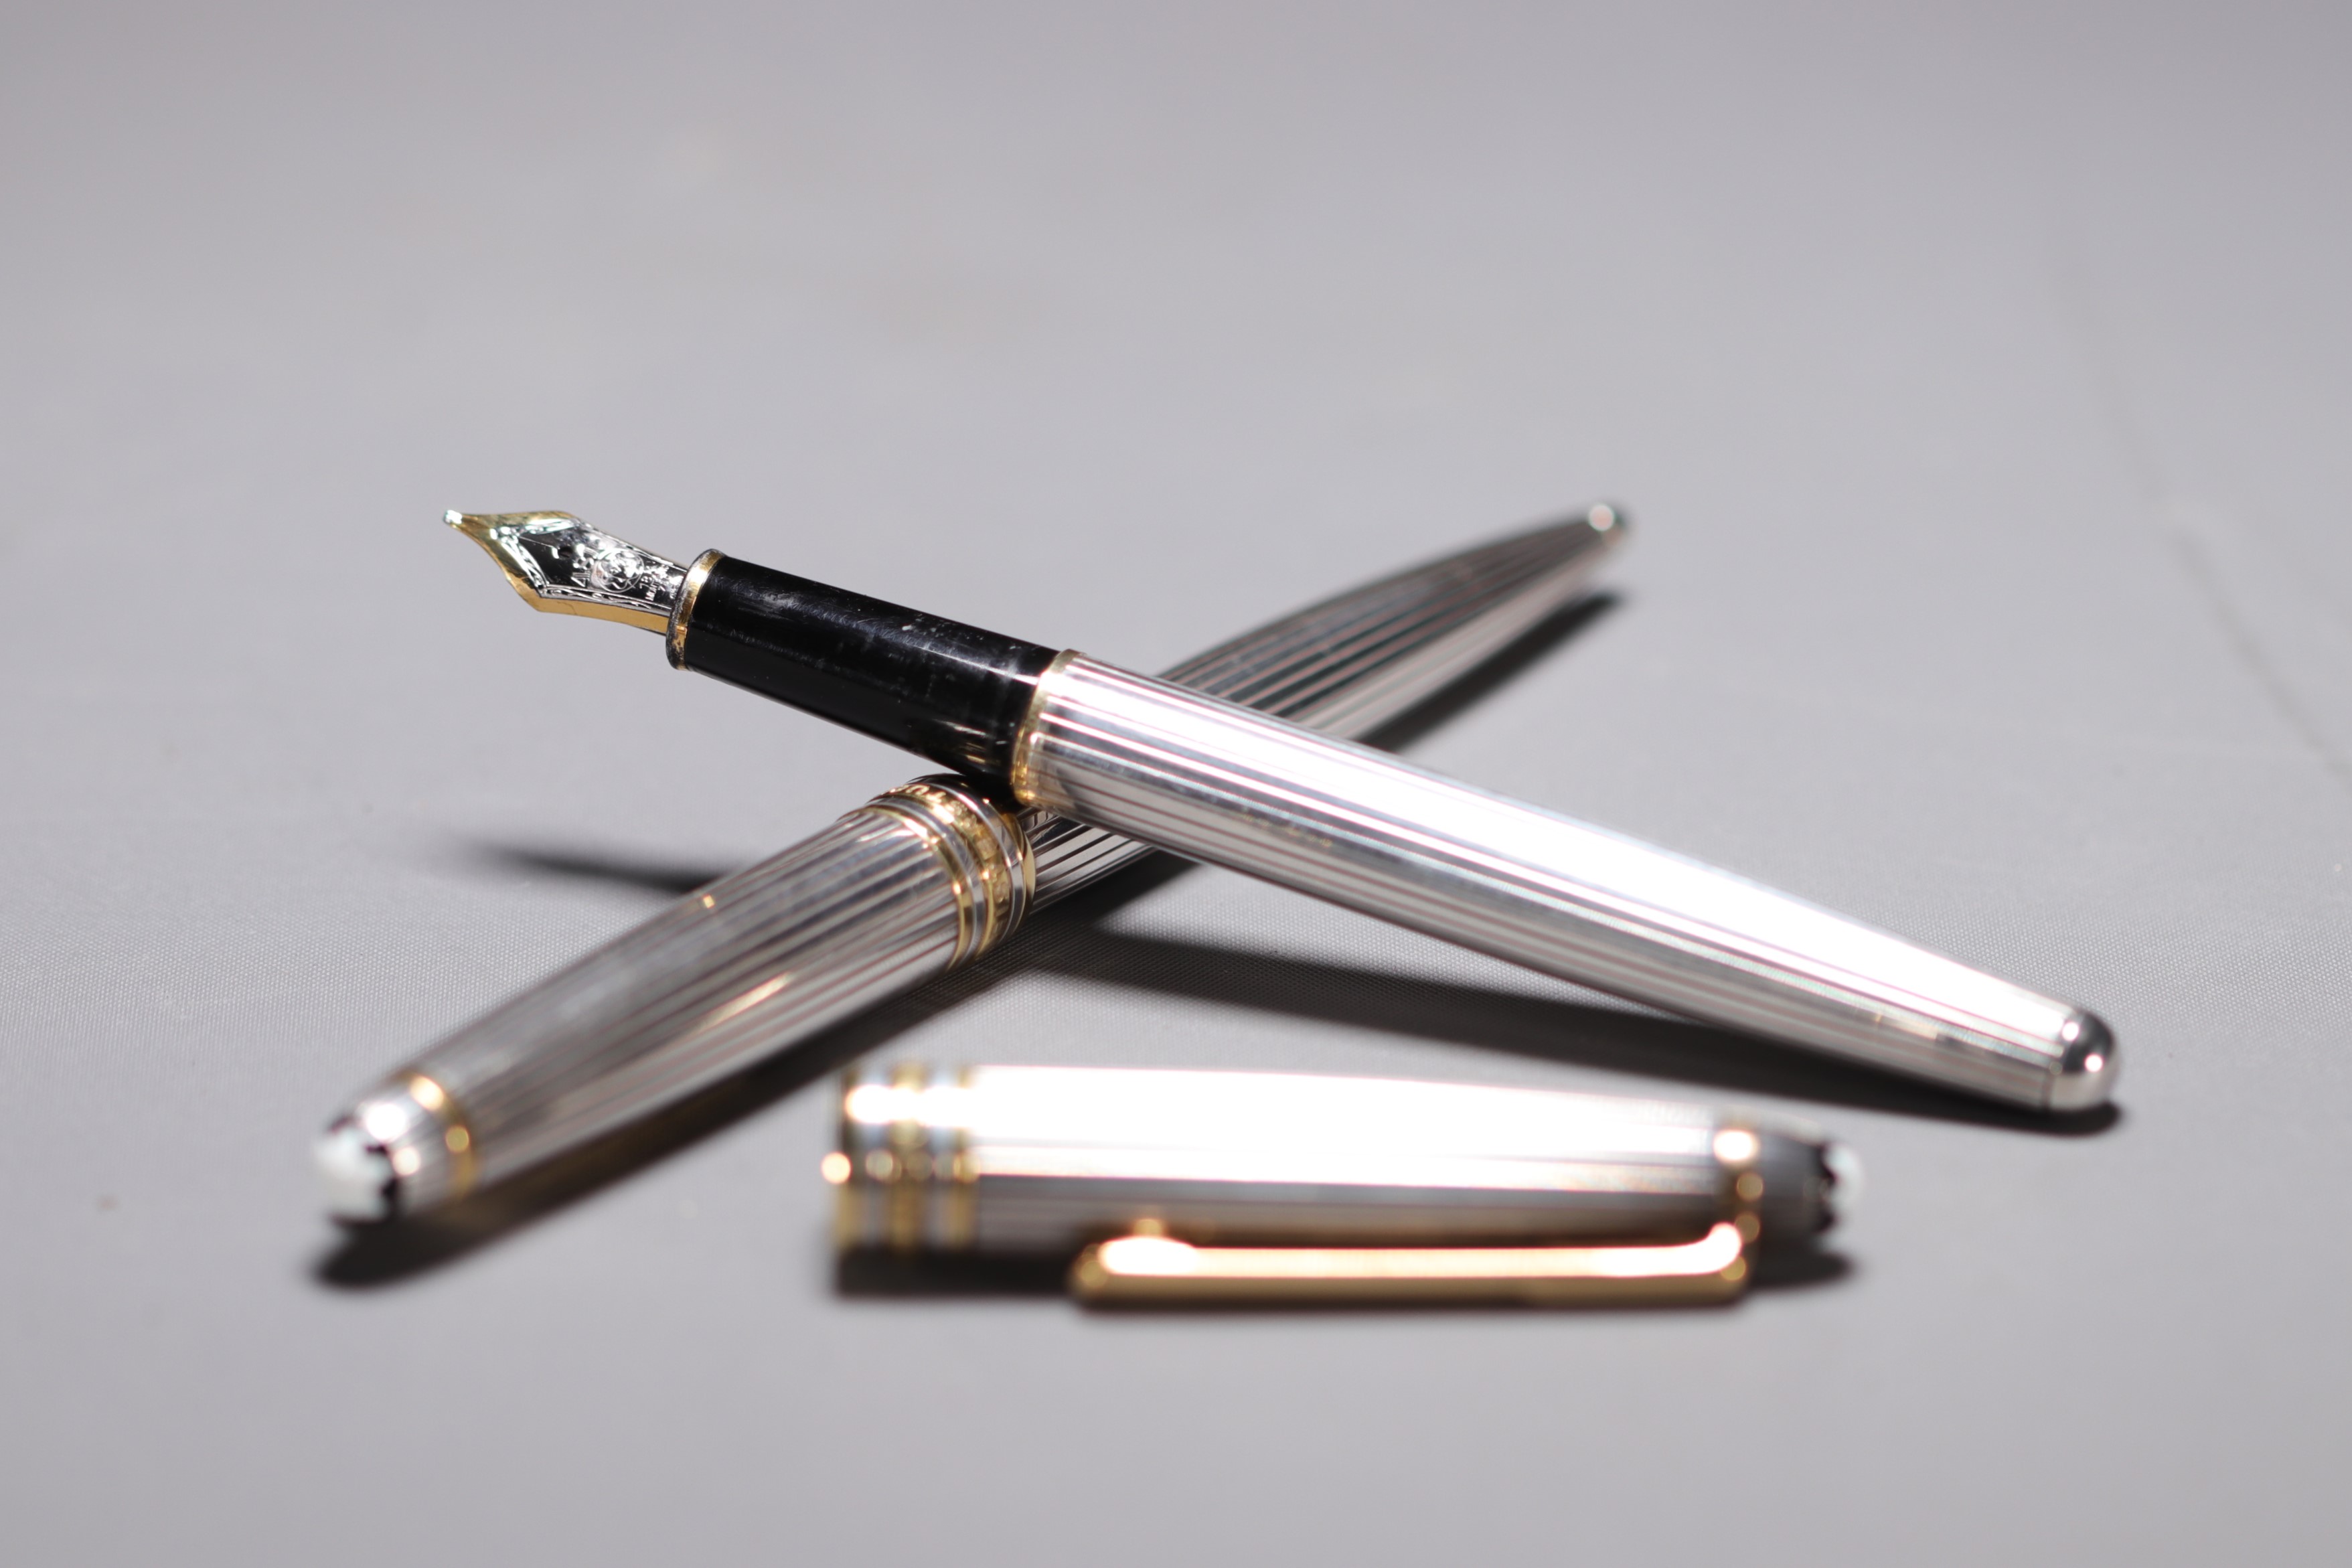 MONTBLANC - MEISTERSTUCK MOZART pen and nib holder set in sterling silver 925, 18K gold nib. - Image 2 of 5